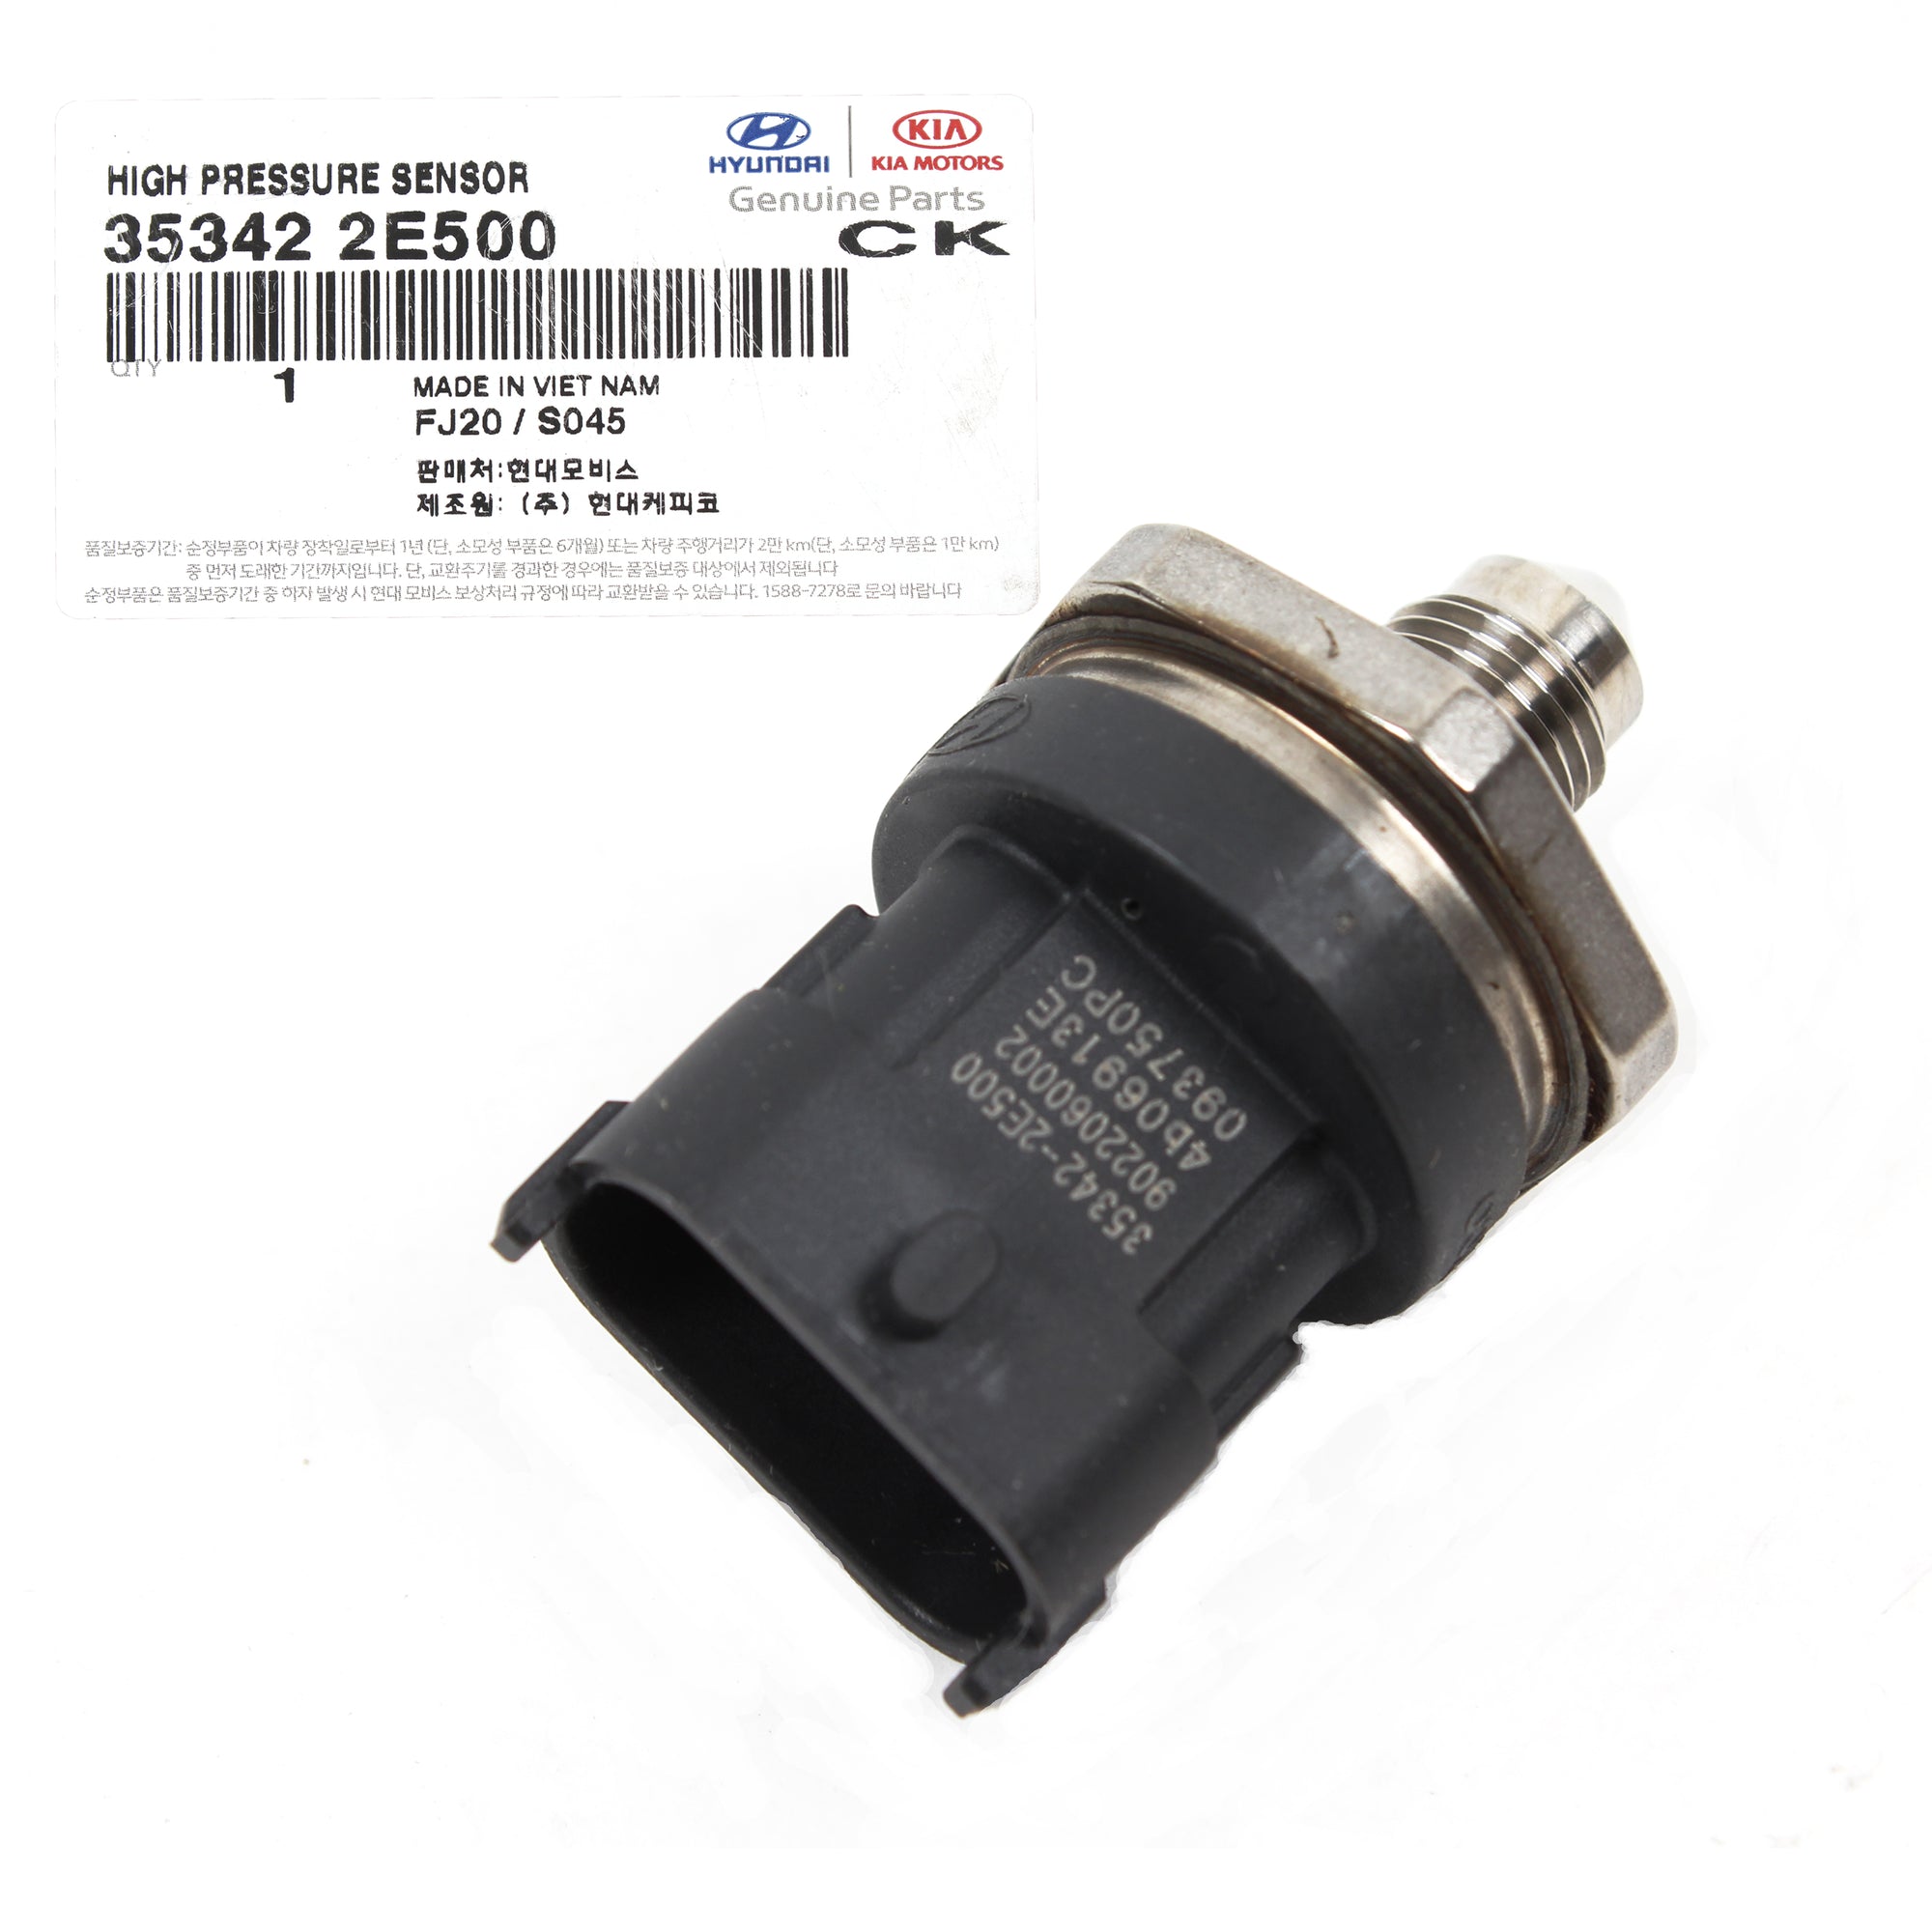 GENUINE Fuel Pressure Sensor for 12-19 Hyundai Kia Compatibility 353422E500